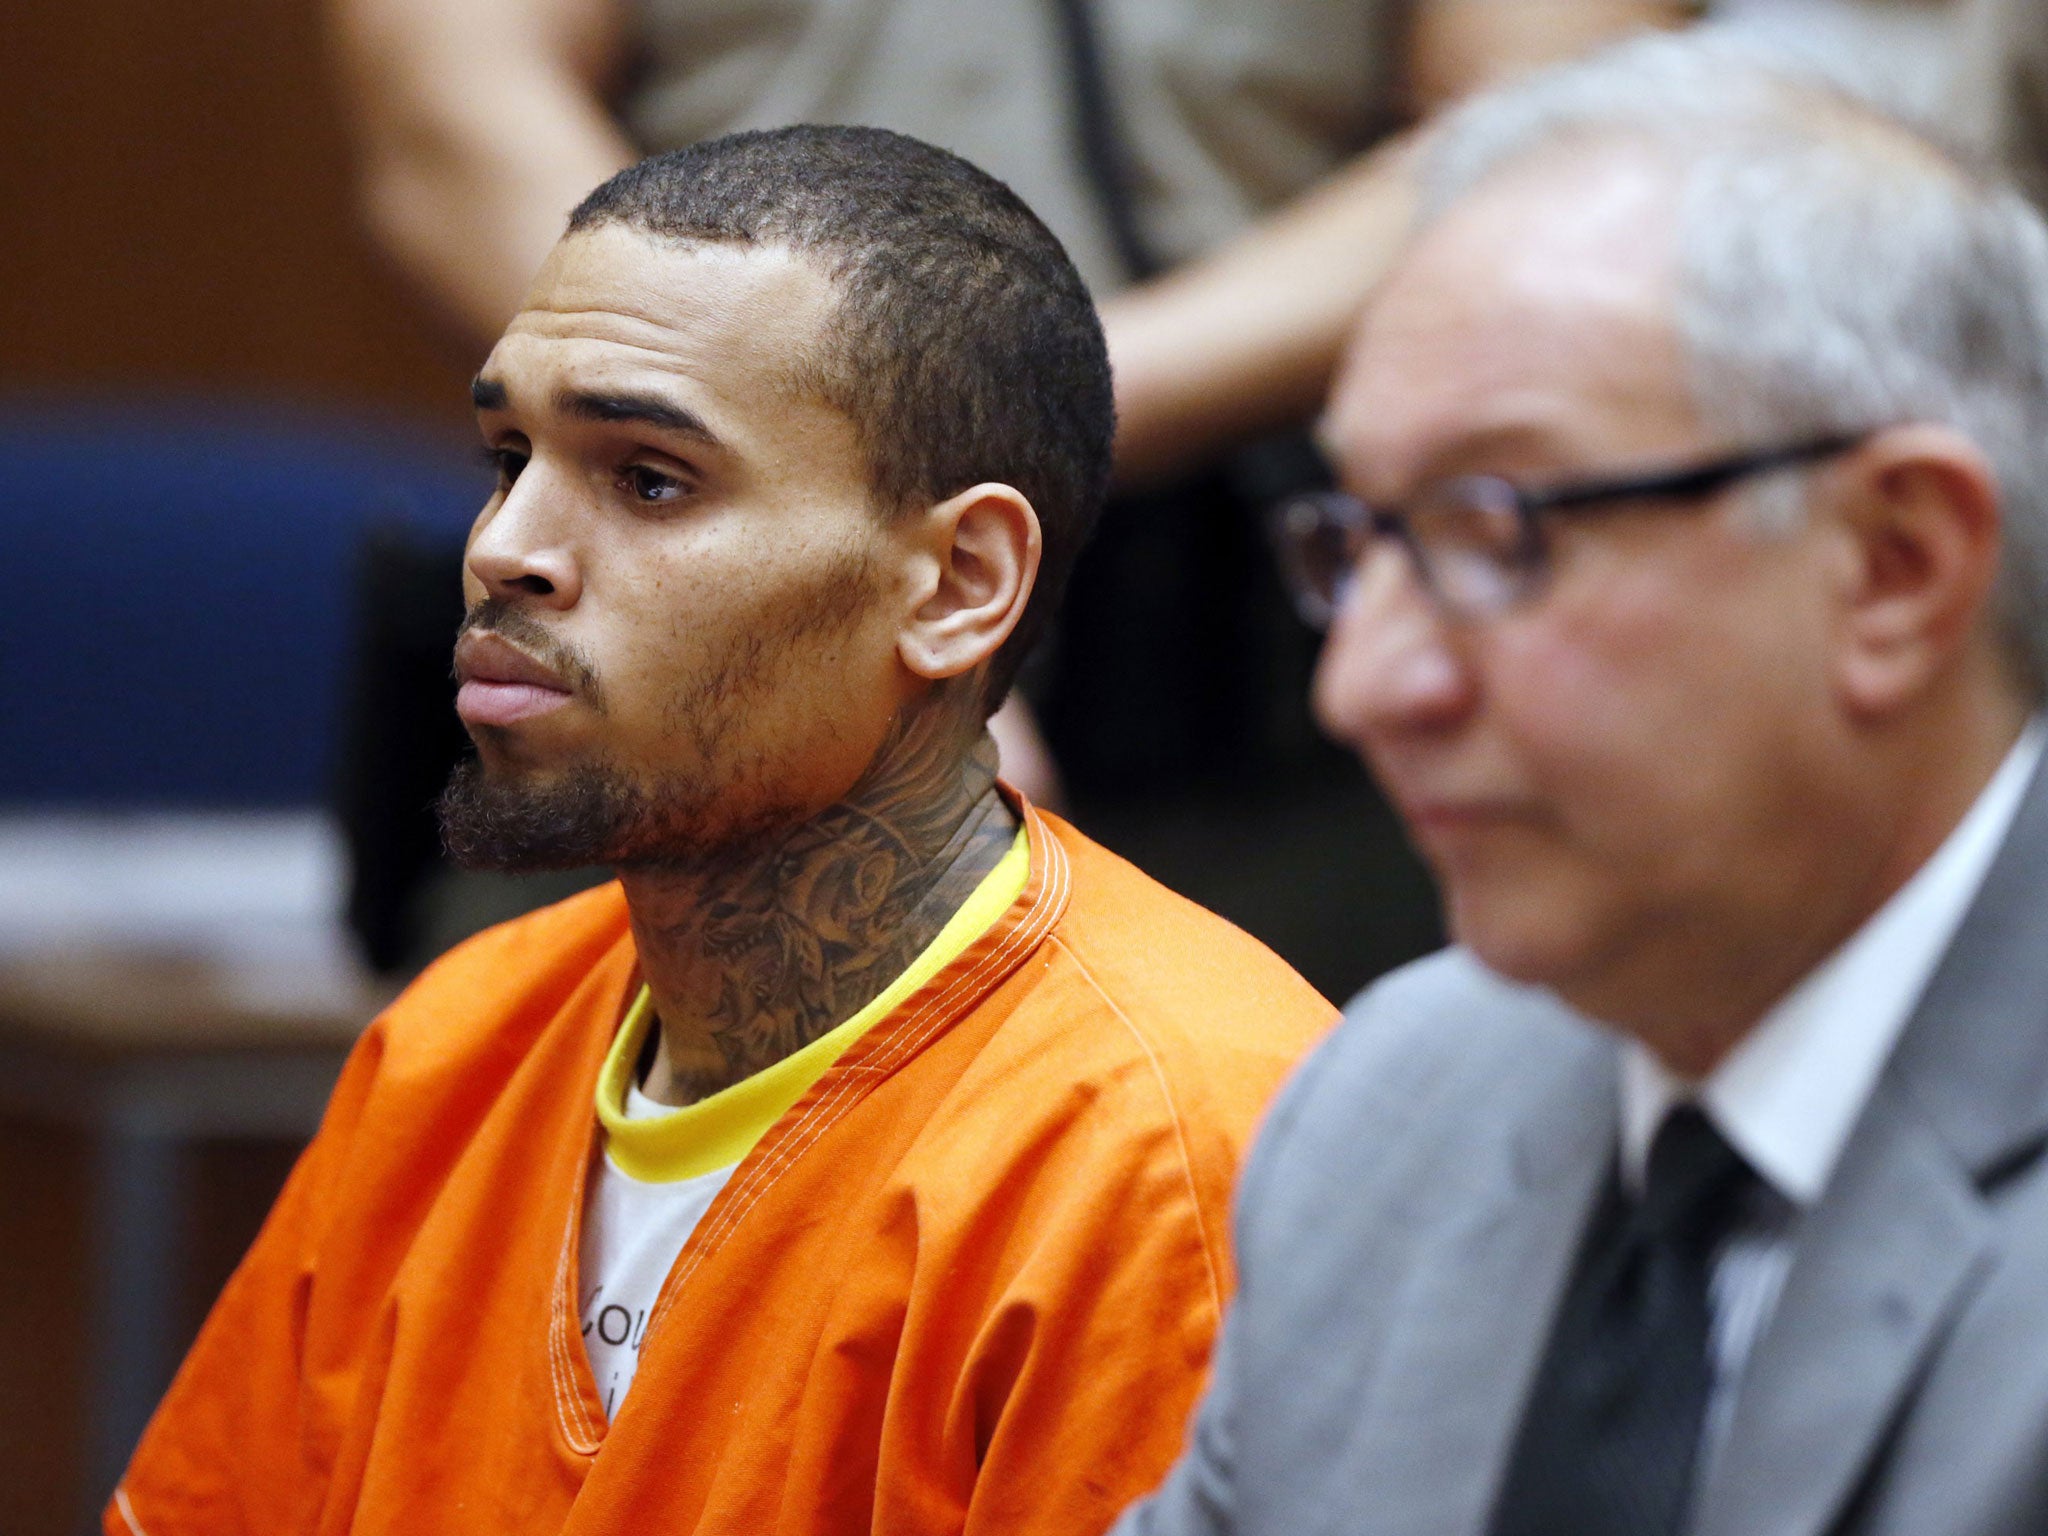 A judge has ordered rapper Chris Brown should remain in jail until April